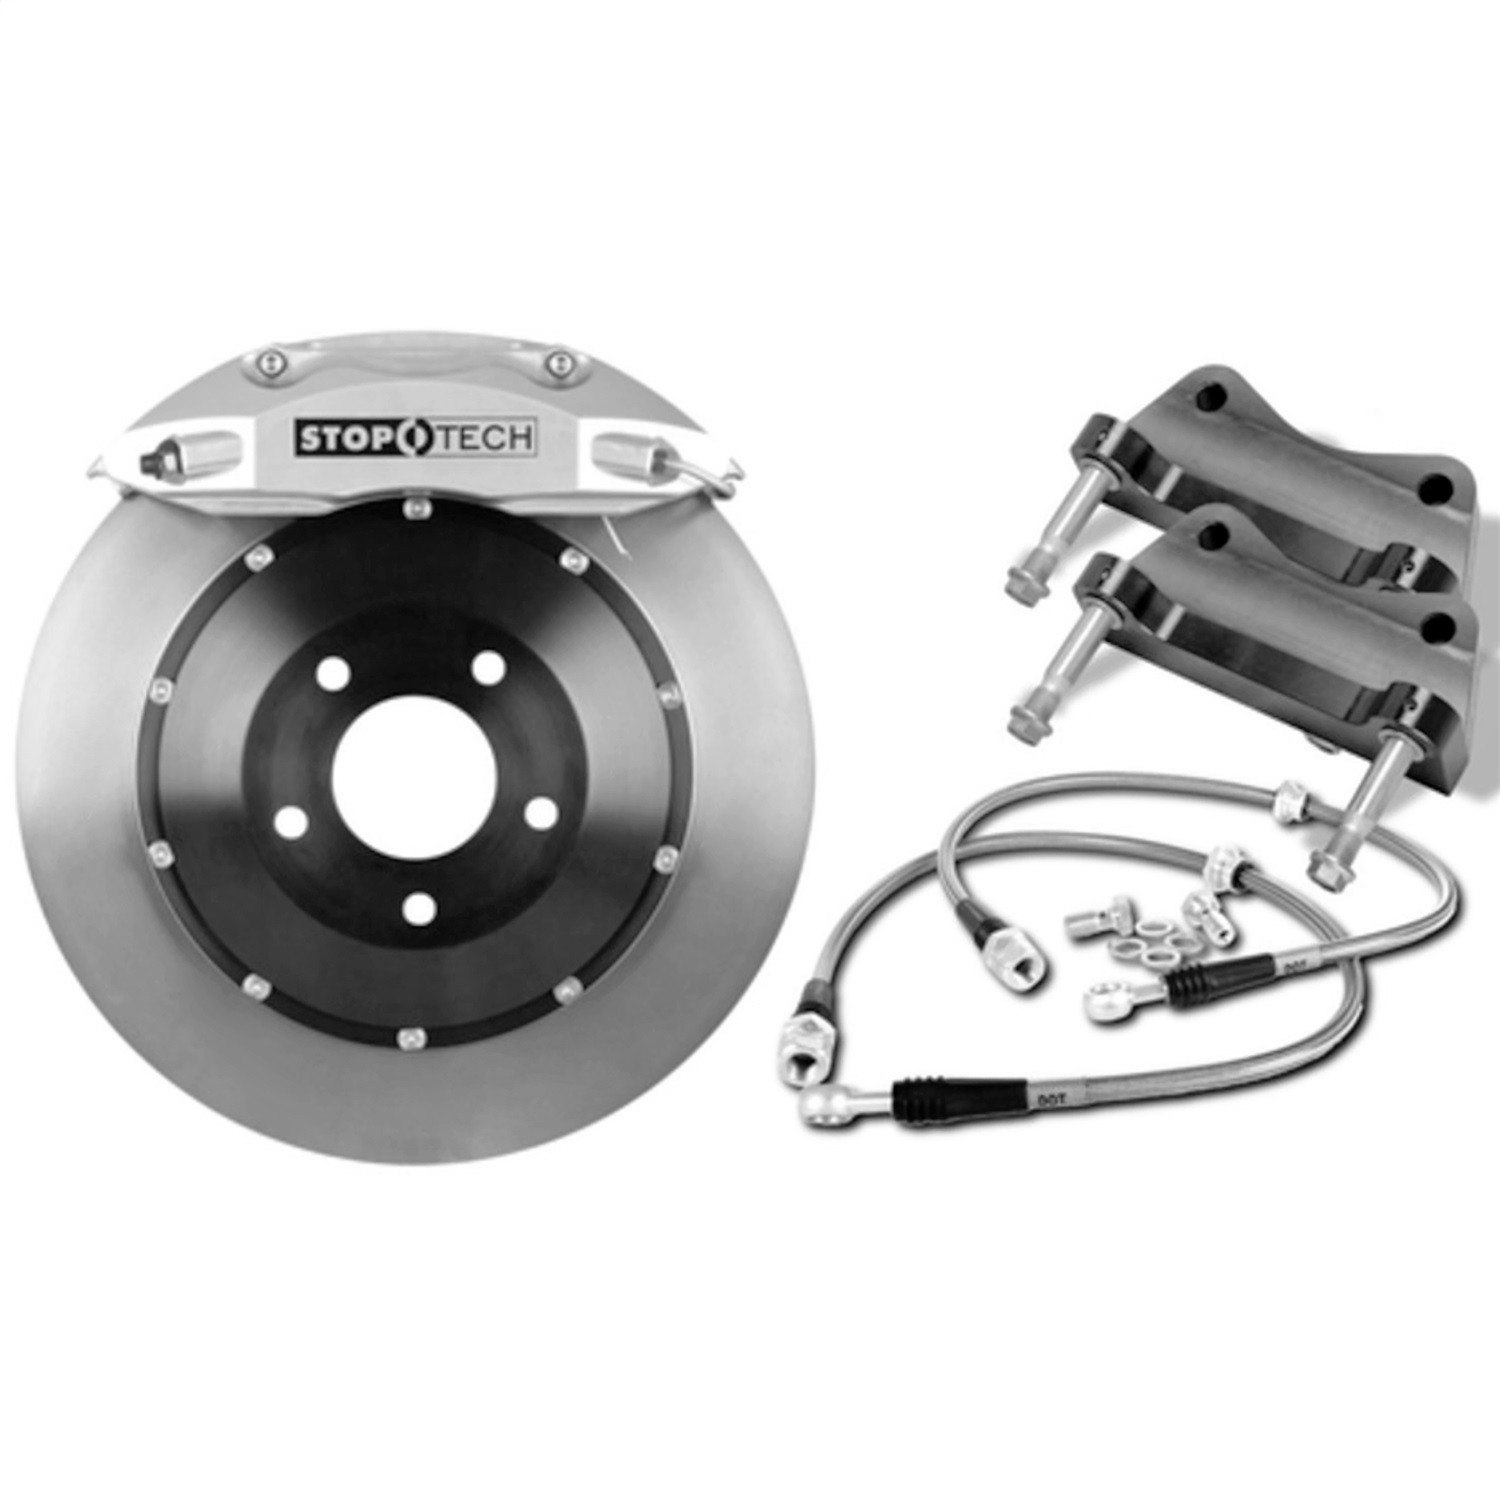 StopTech 83.788.6700.R1 Big Brake Kit w/2 Piece Rotor Fits 00-12 Boxster Cayman